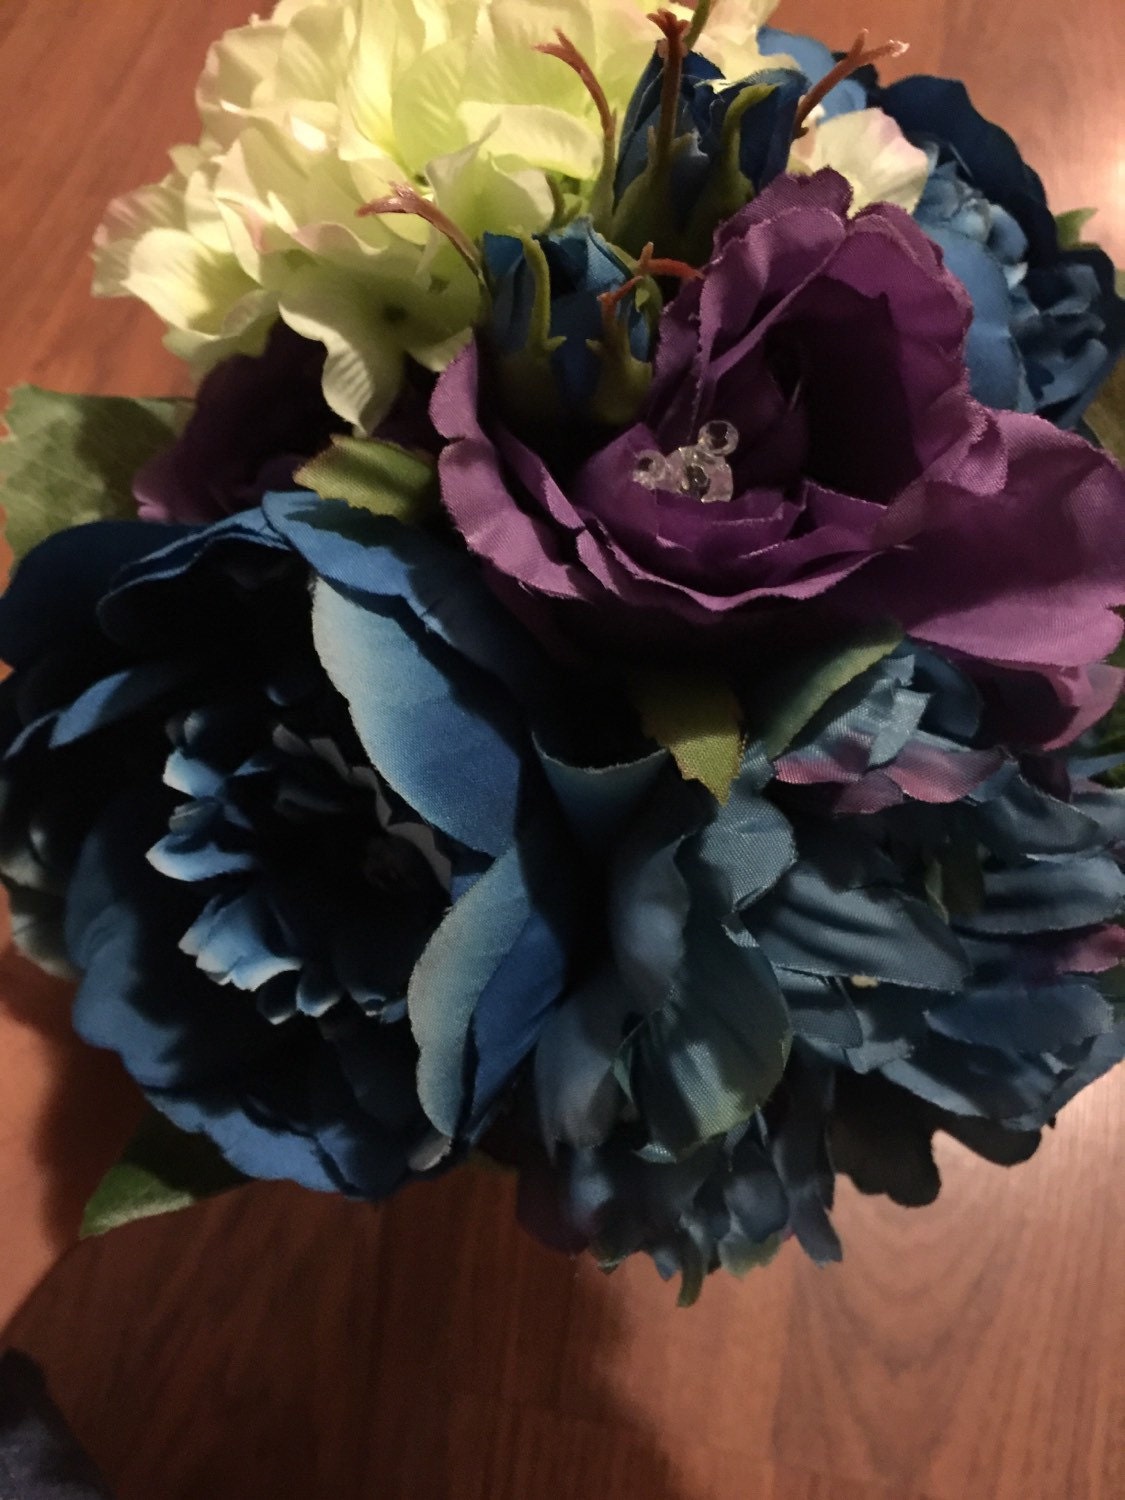 Disney Wedding Bridal Party Bouquet Pins (Qty 12)-HIdden Mickey Flower Picks-Powder  Blue (New Color)-Cinderella Blue